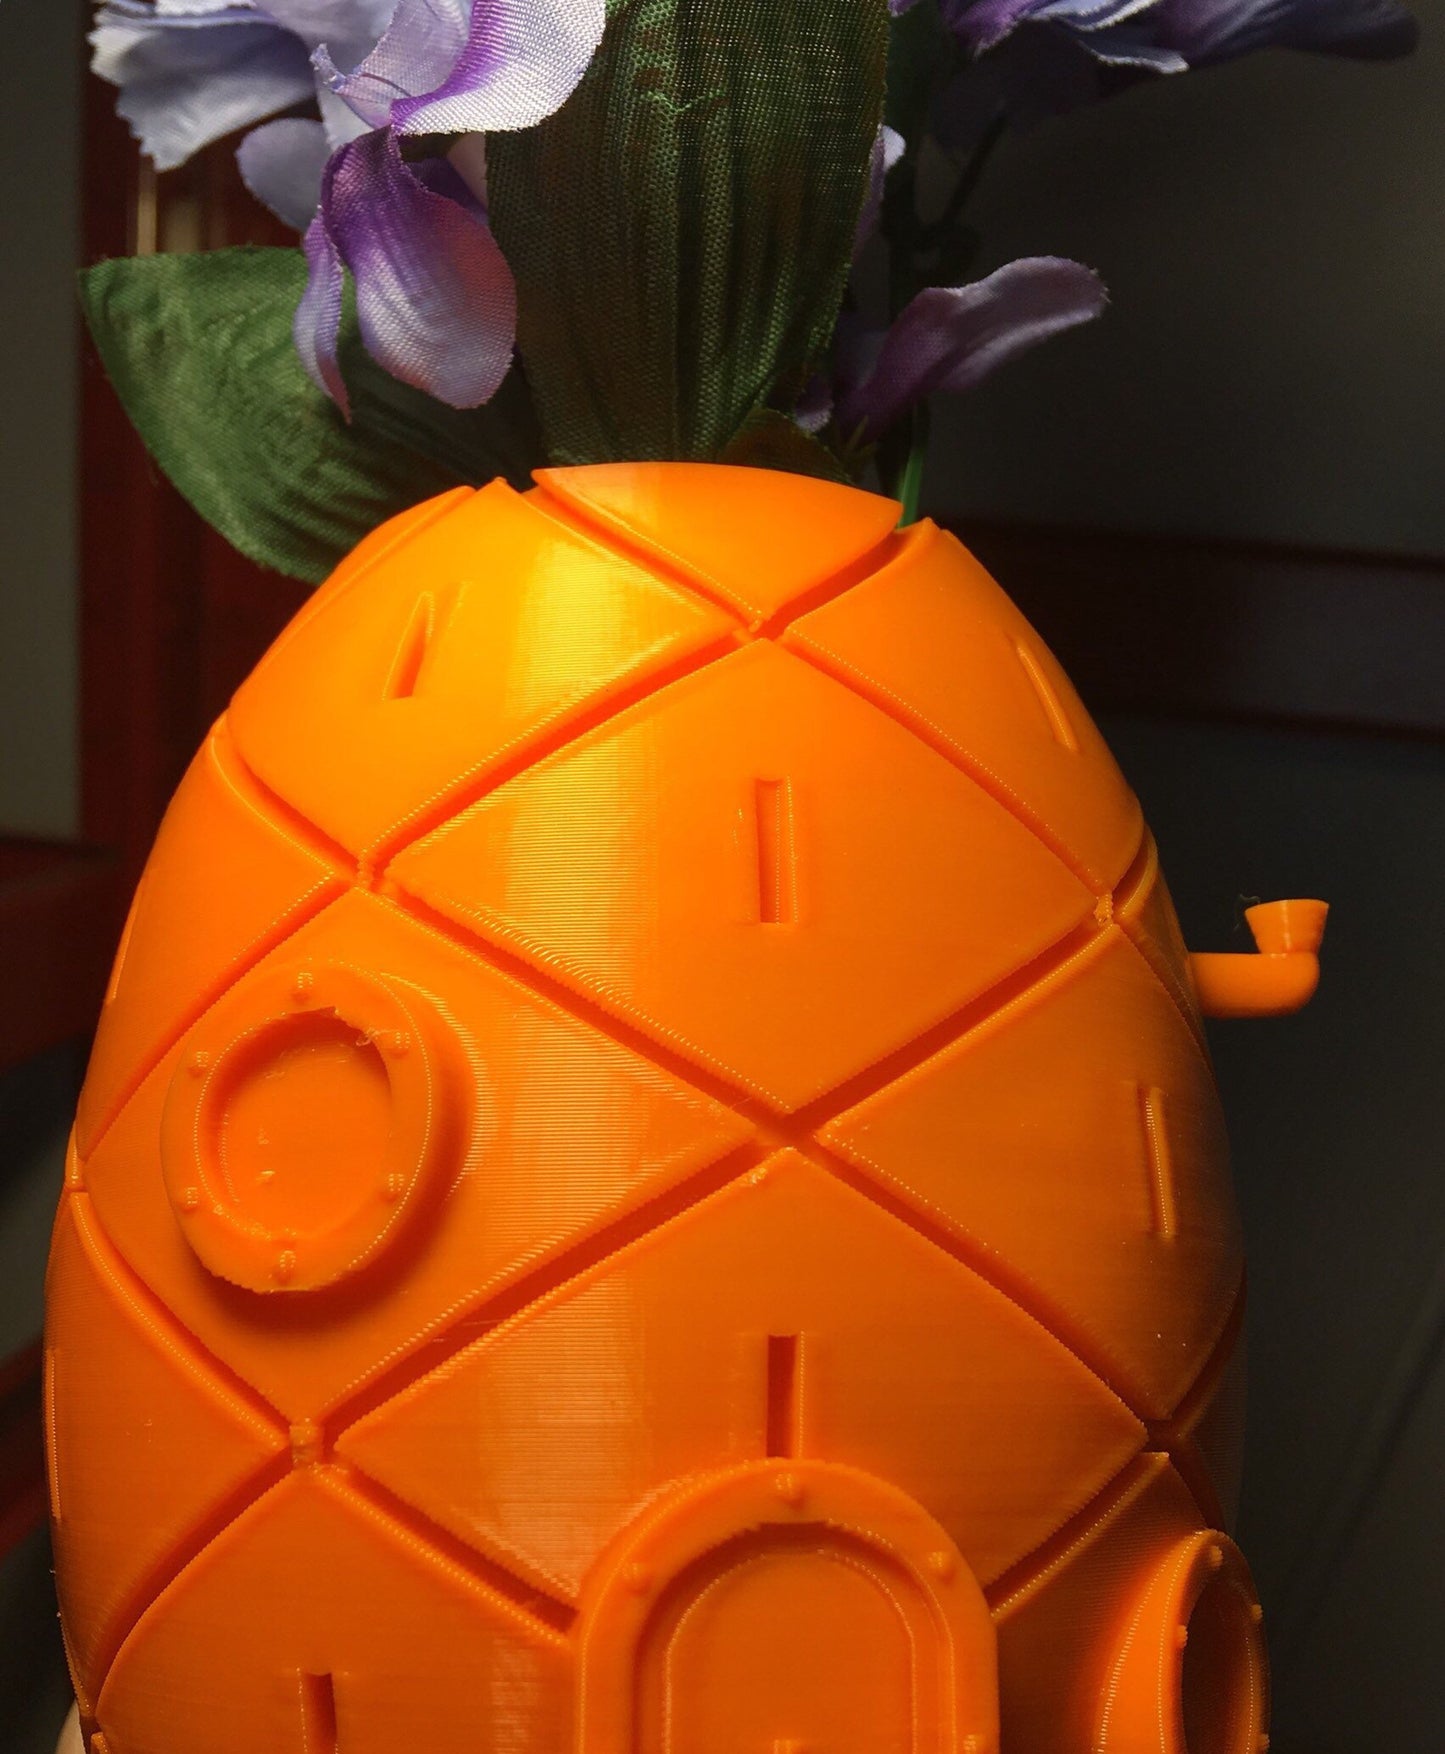 Spongebob Pineapple Plant Pot / Planter / Gift / Decor